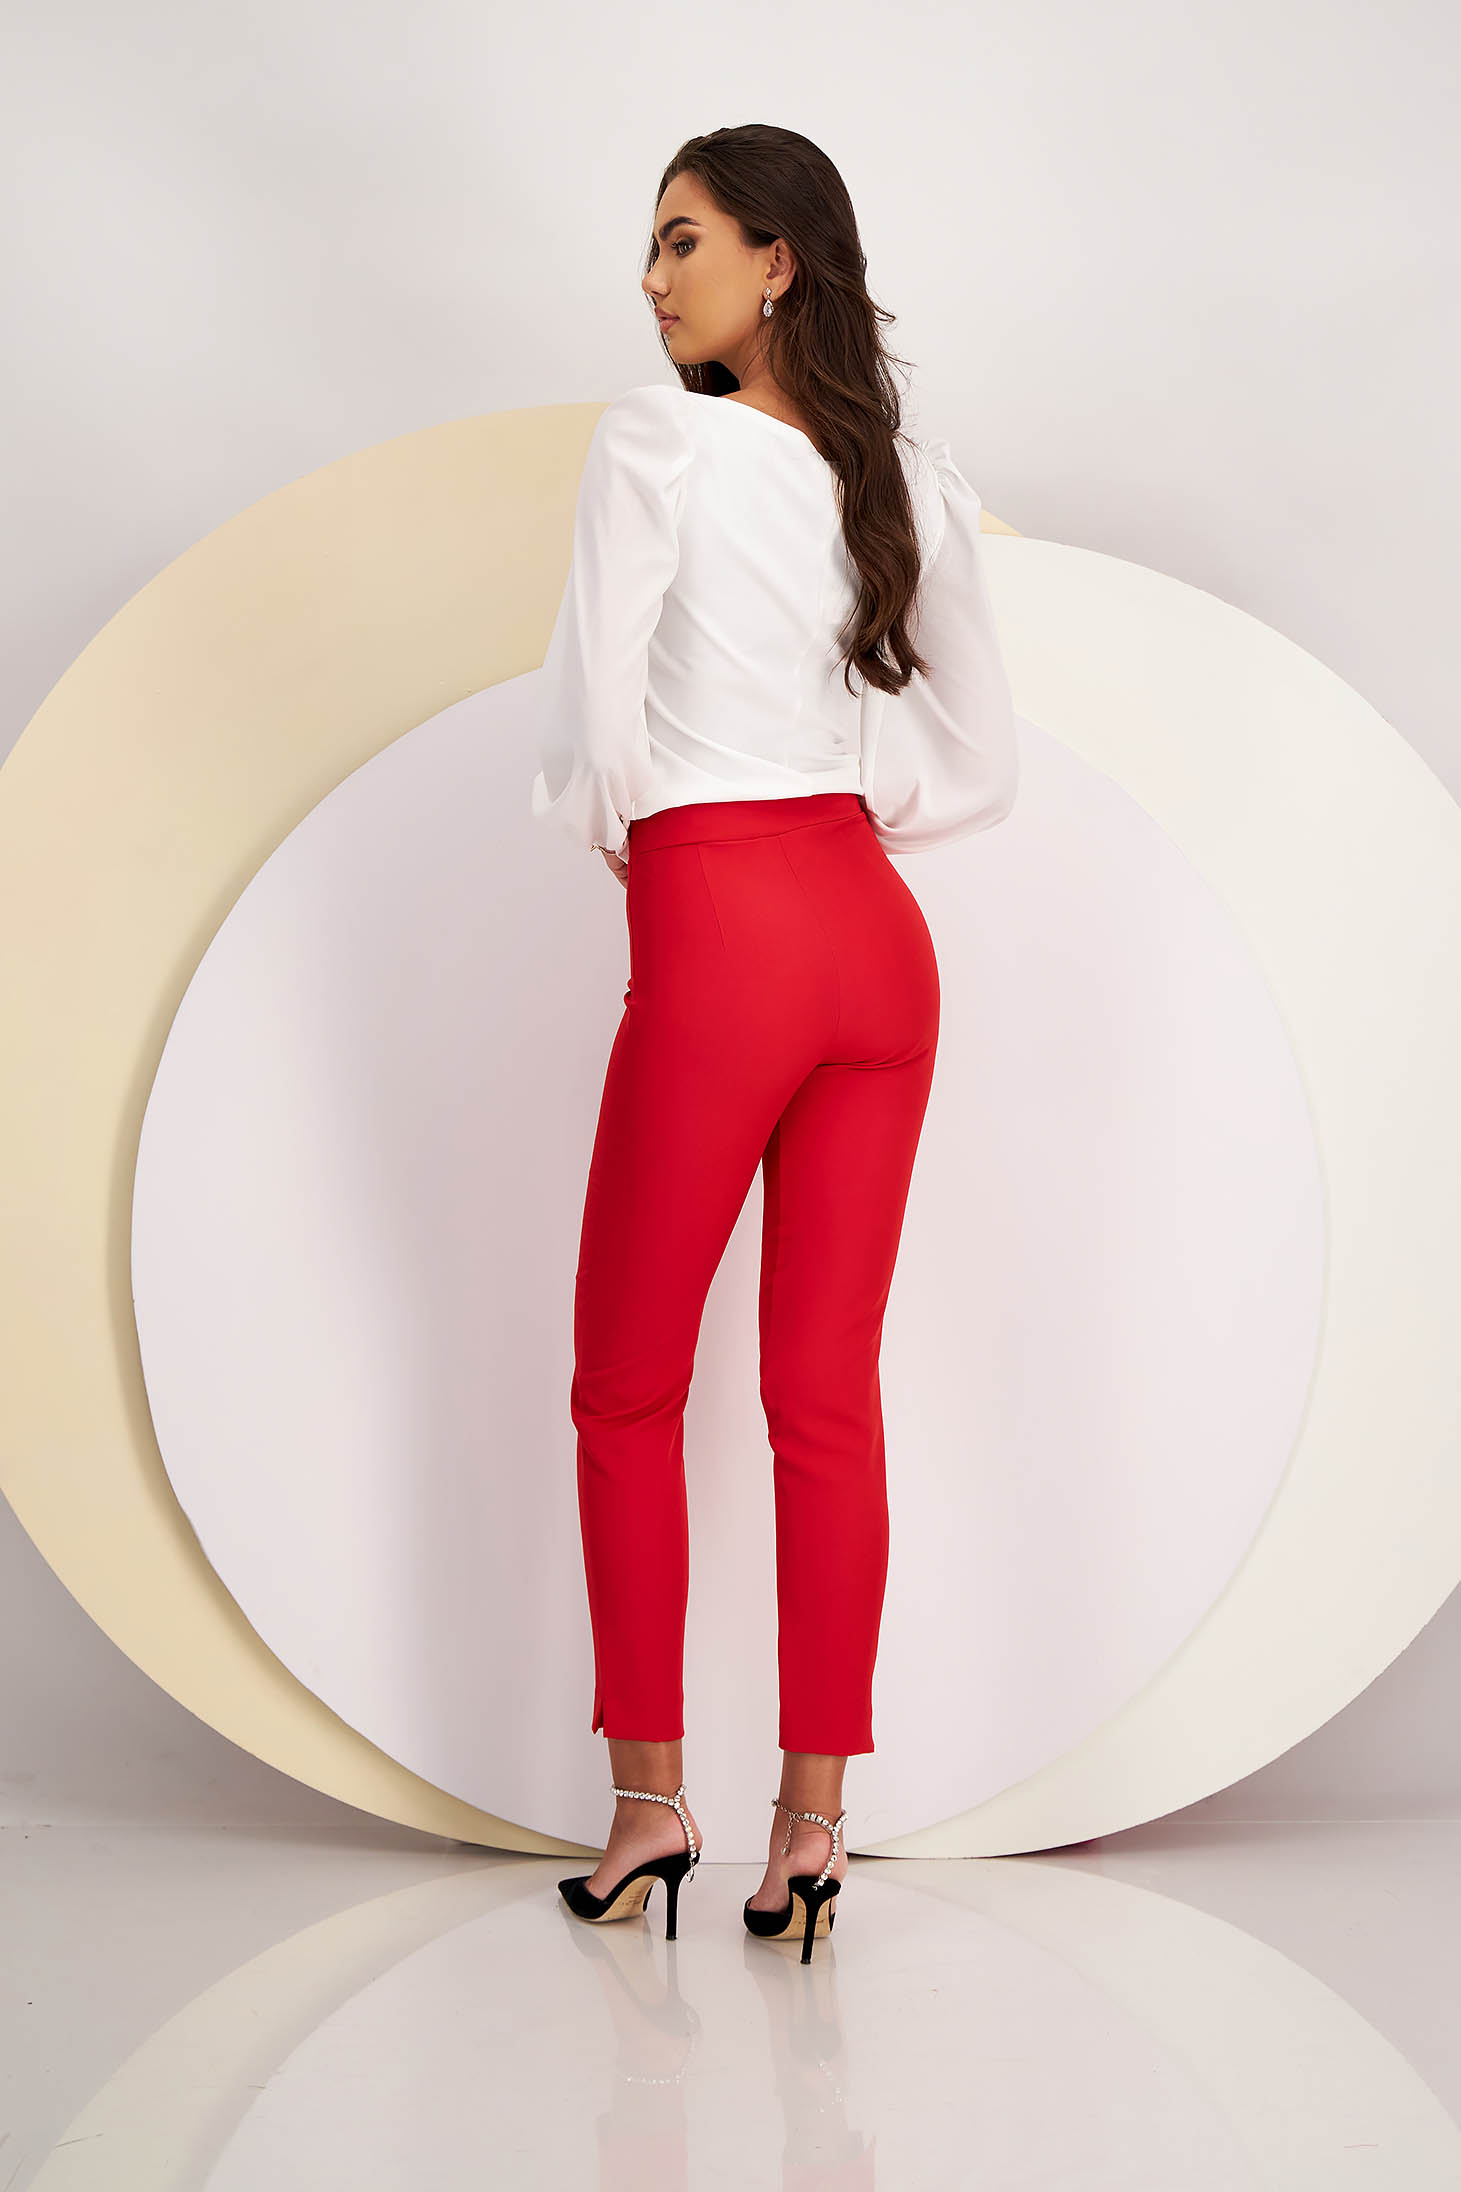 Pantaloni din stofa usor elastica rosii conici cu talie inalta - StarShinerS 4 - StarShinerS.ro